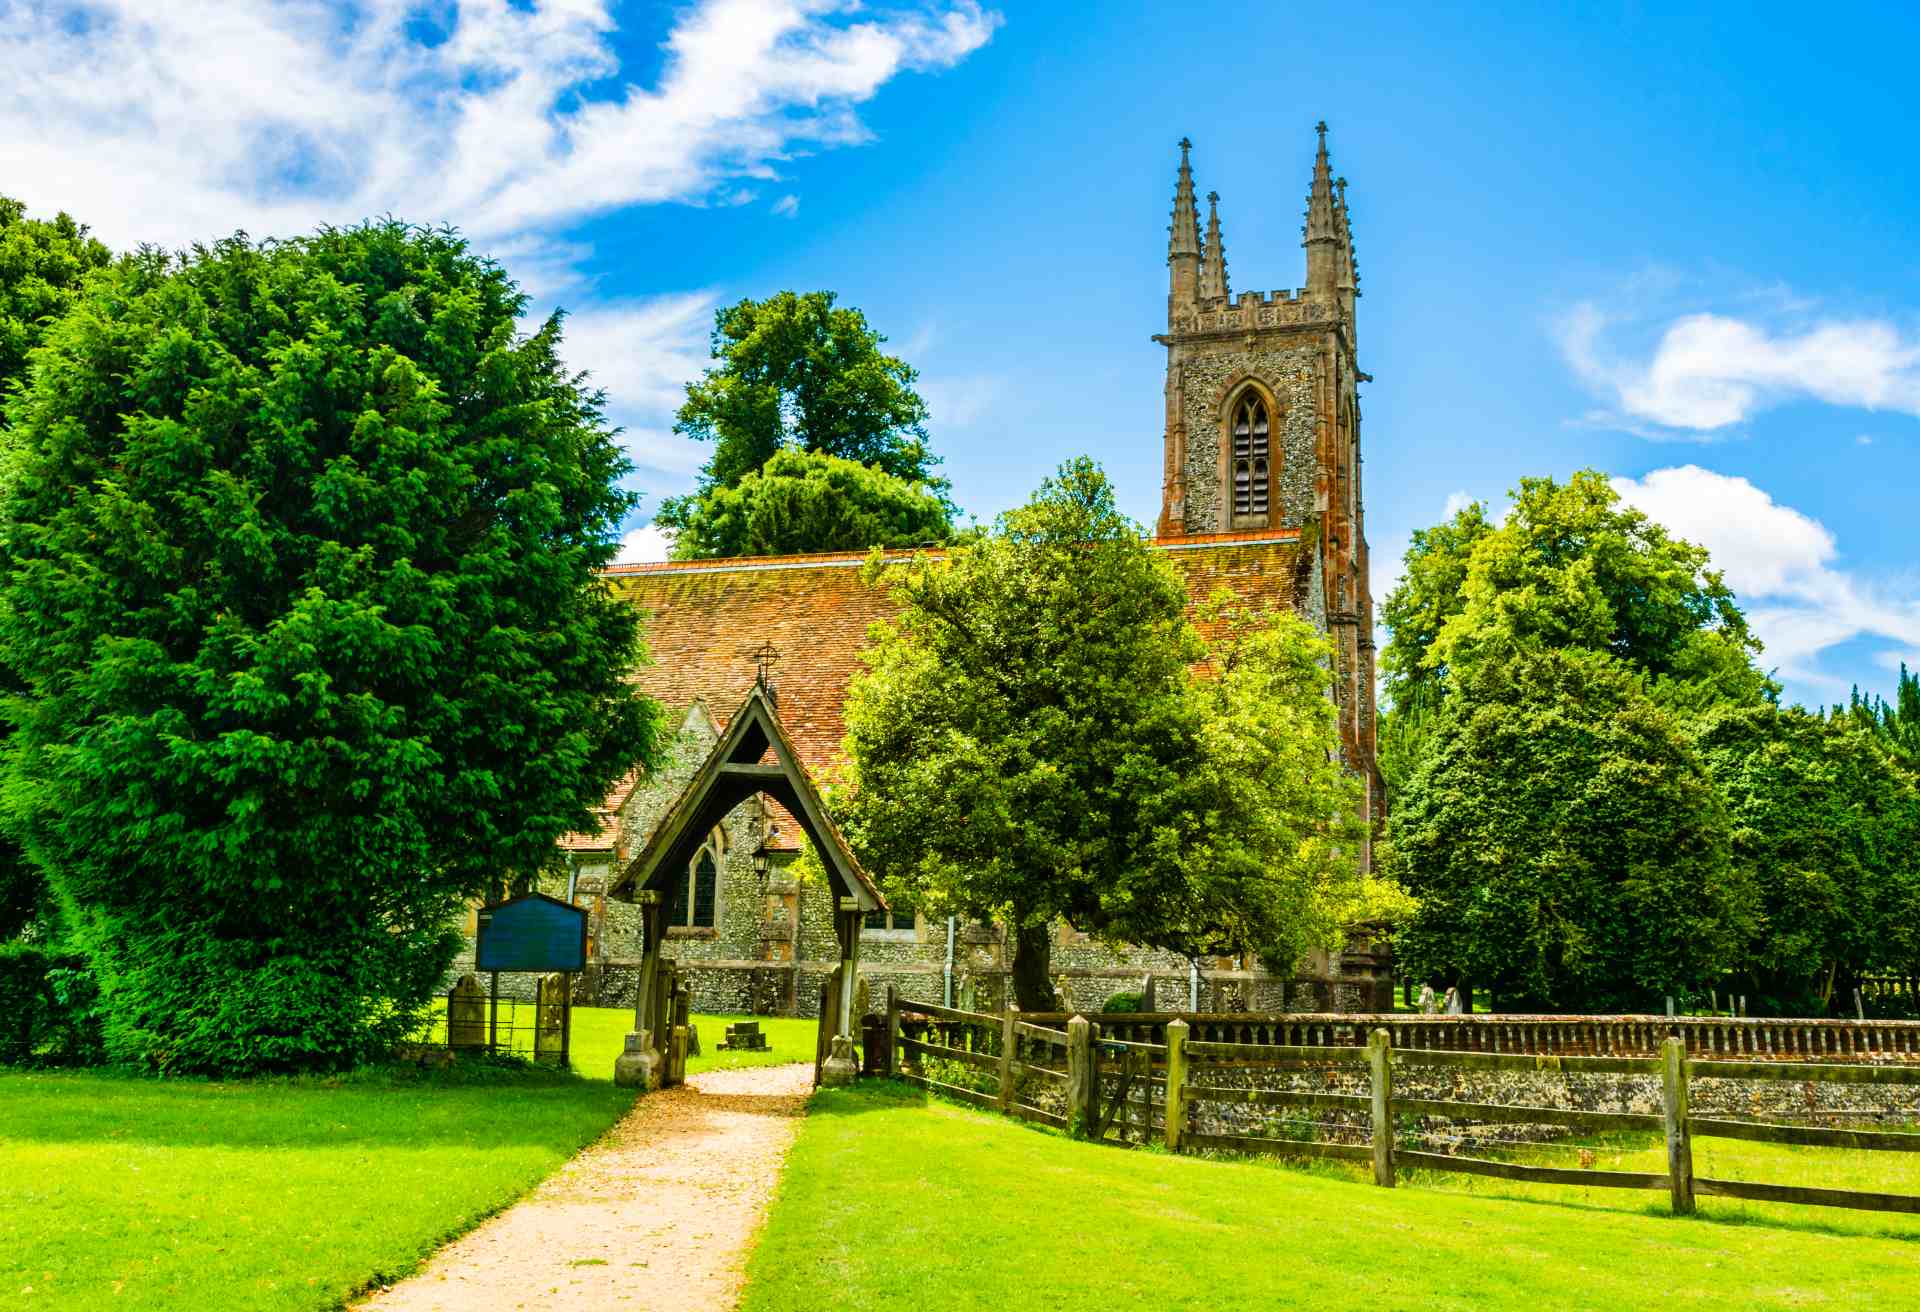 St Nicholas Church, Jane Austen's